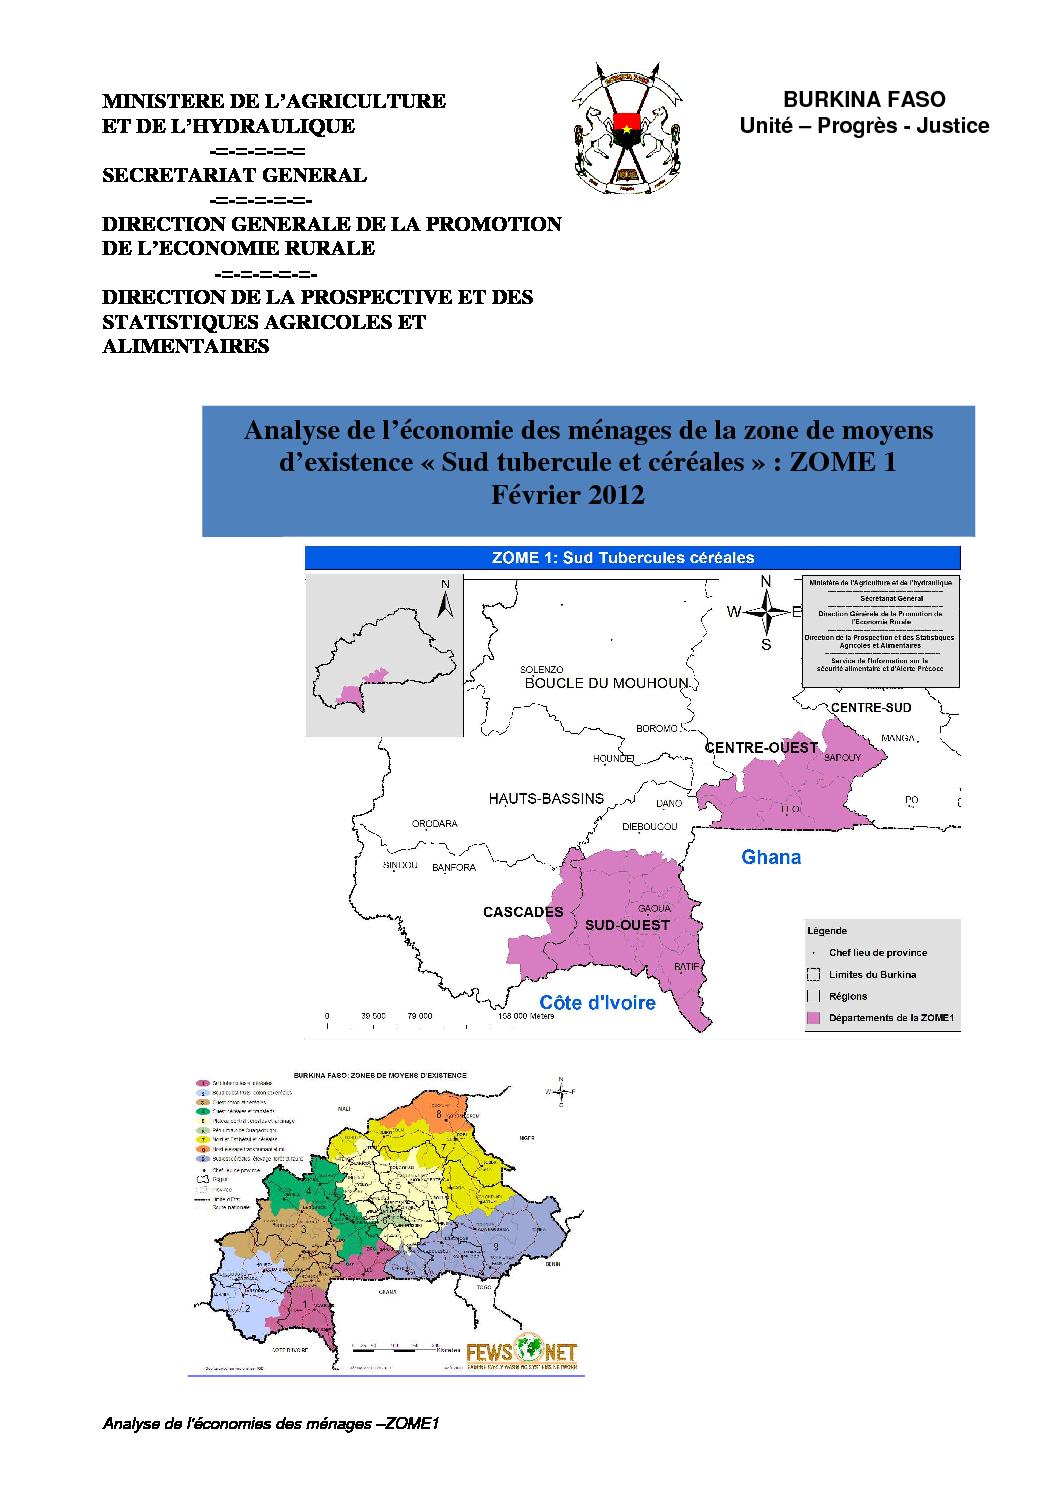 Profil Burkina Faso - ZOME 1 - Fevrier 2012